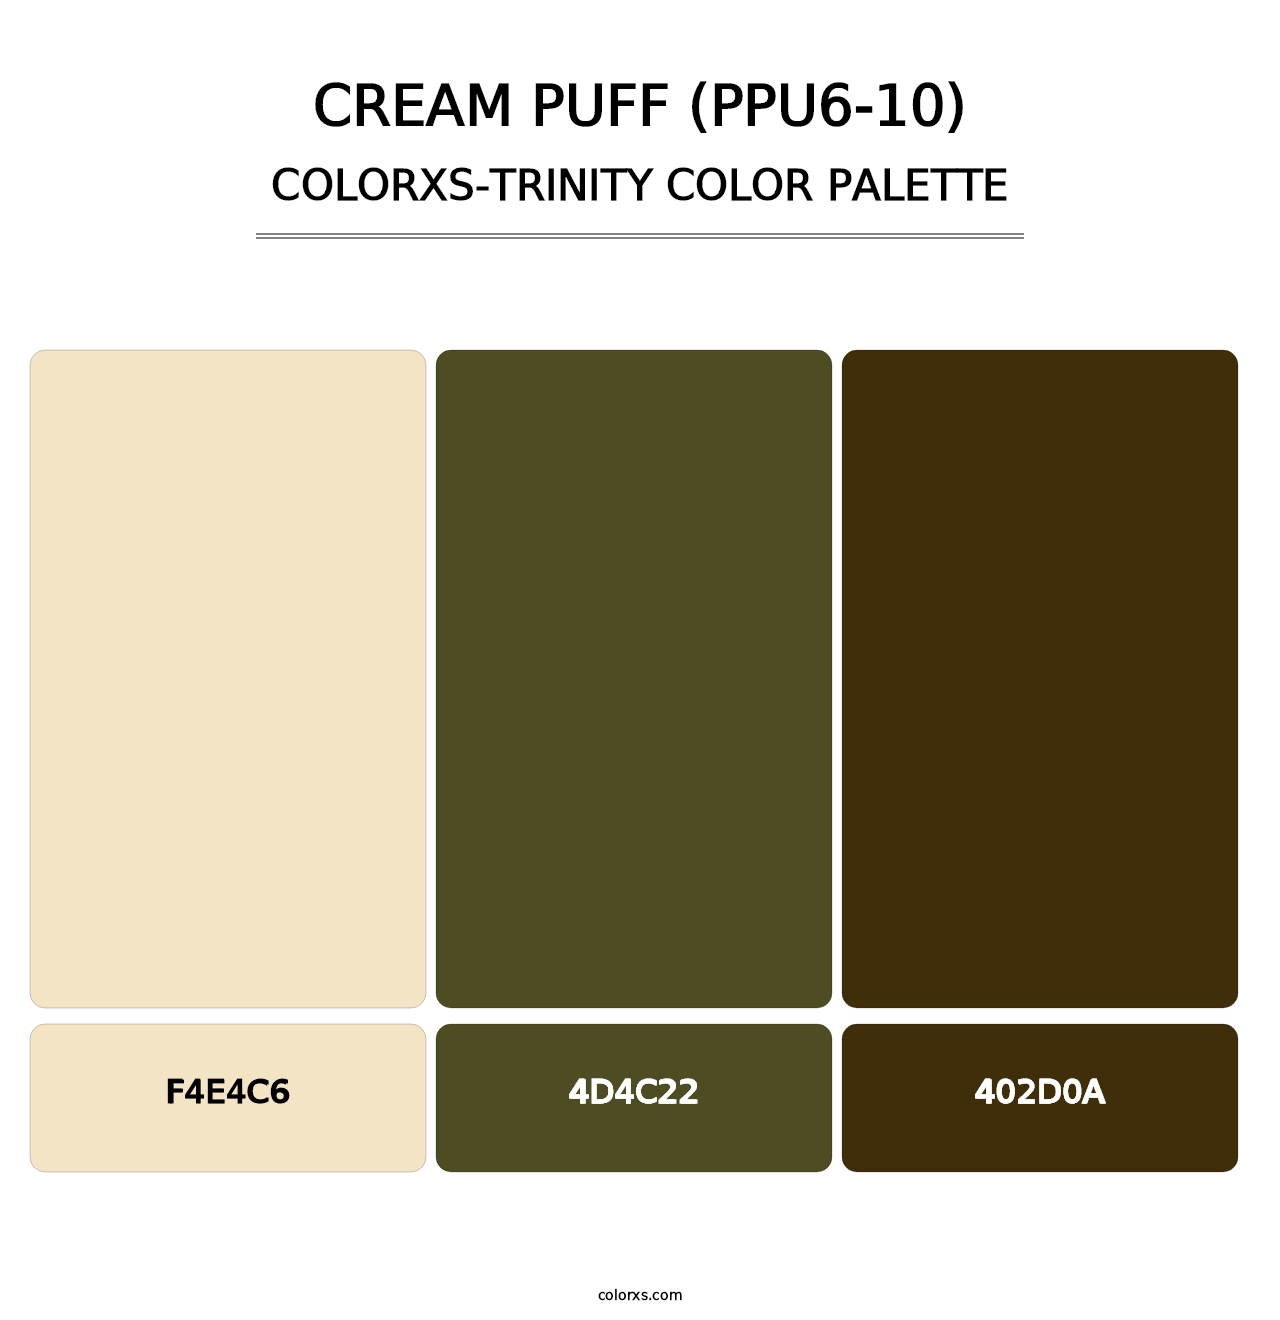 Cream Puff (PPU6-10) - Colorxs Trinity Palette